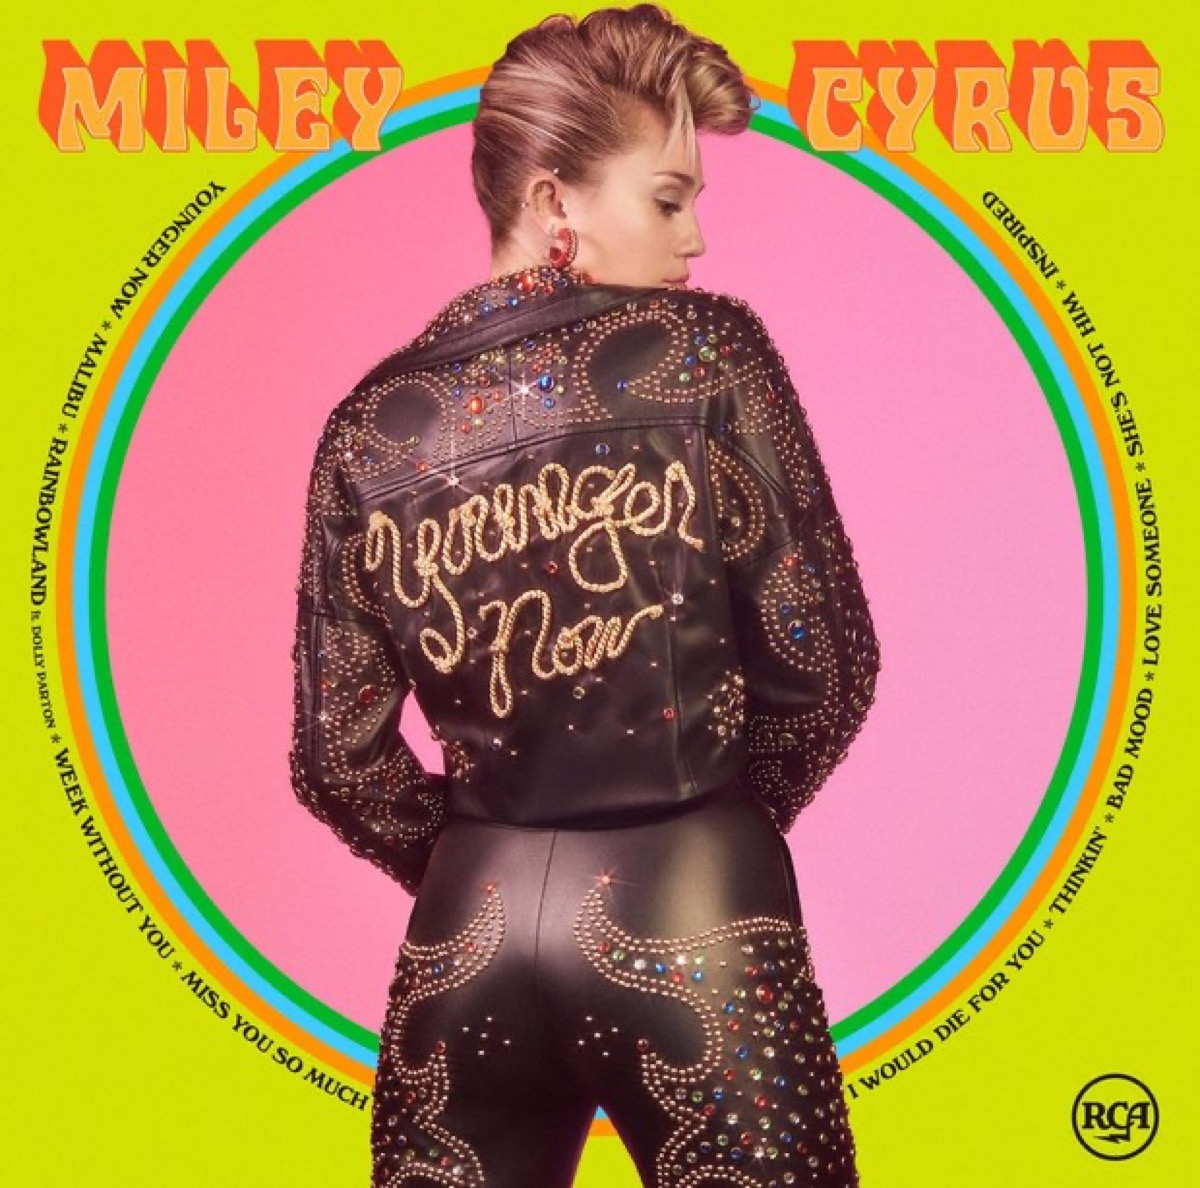 Miley Cyrus sixth studio album cover